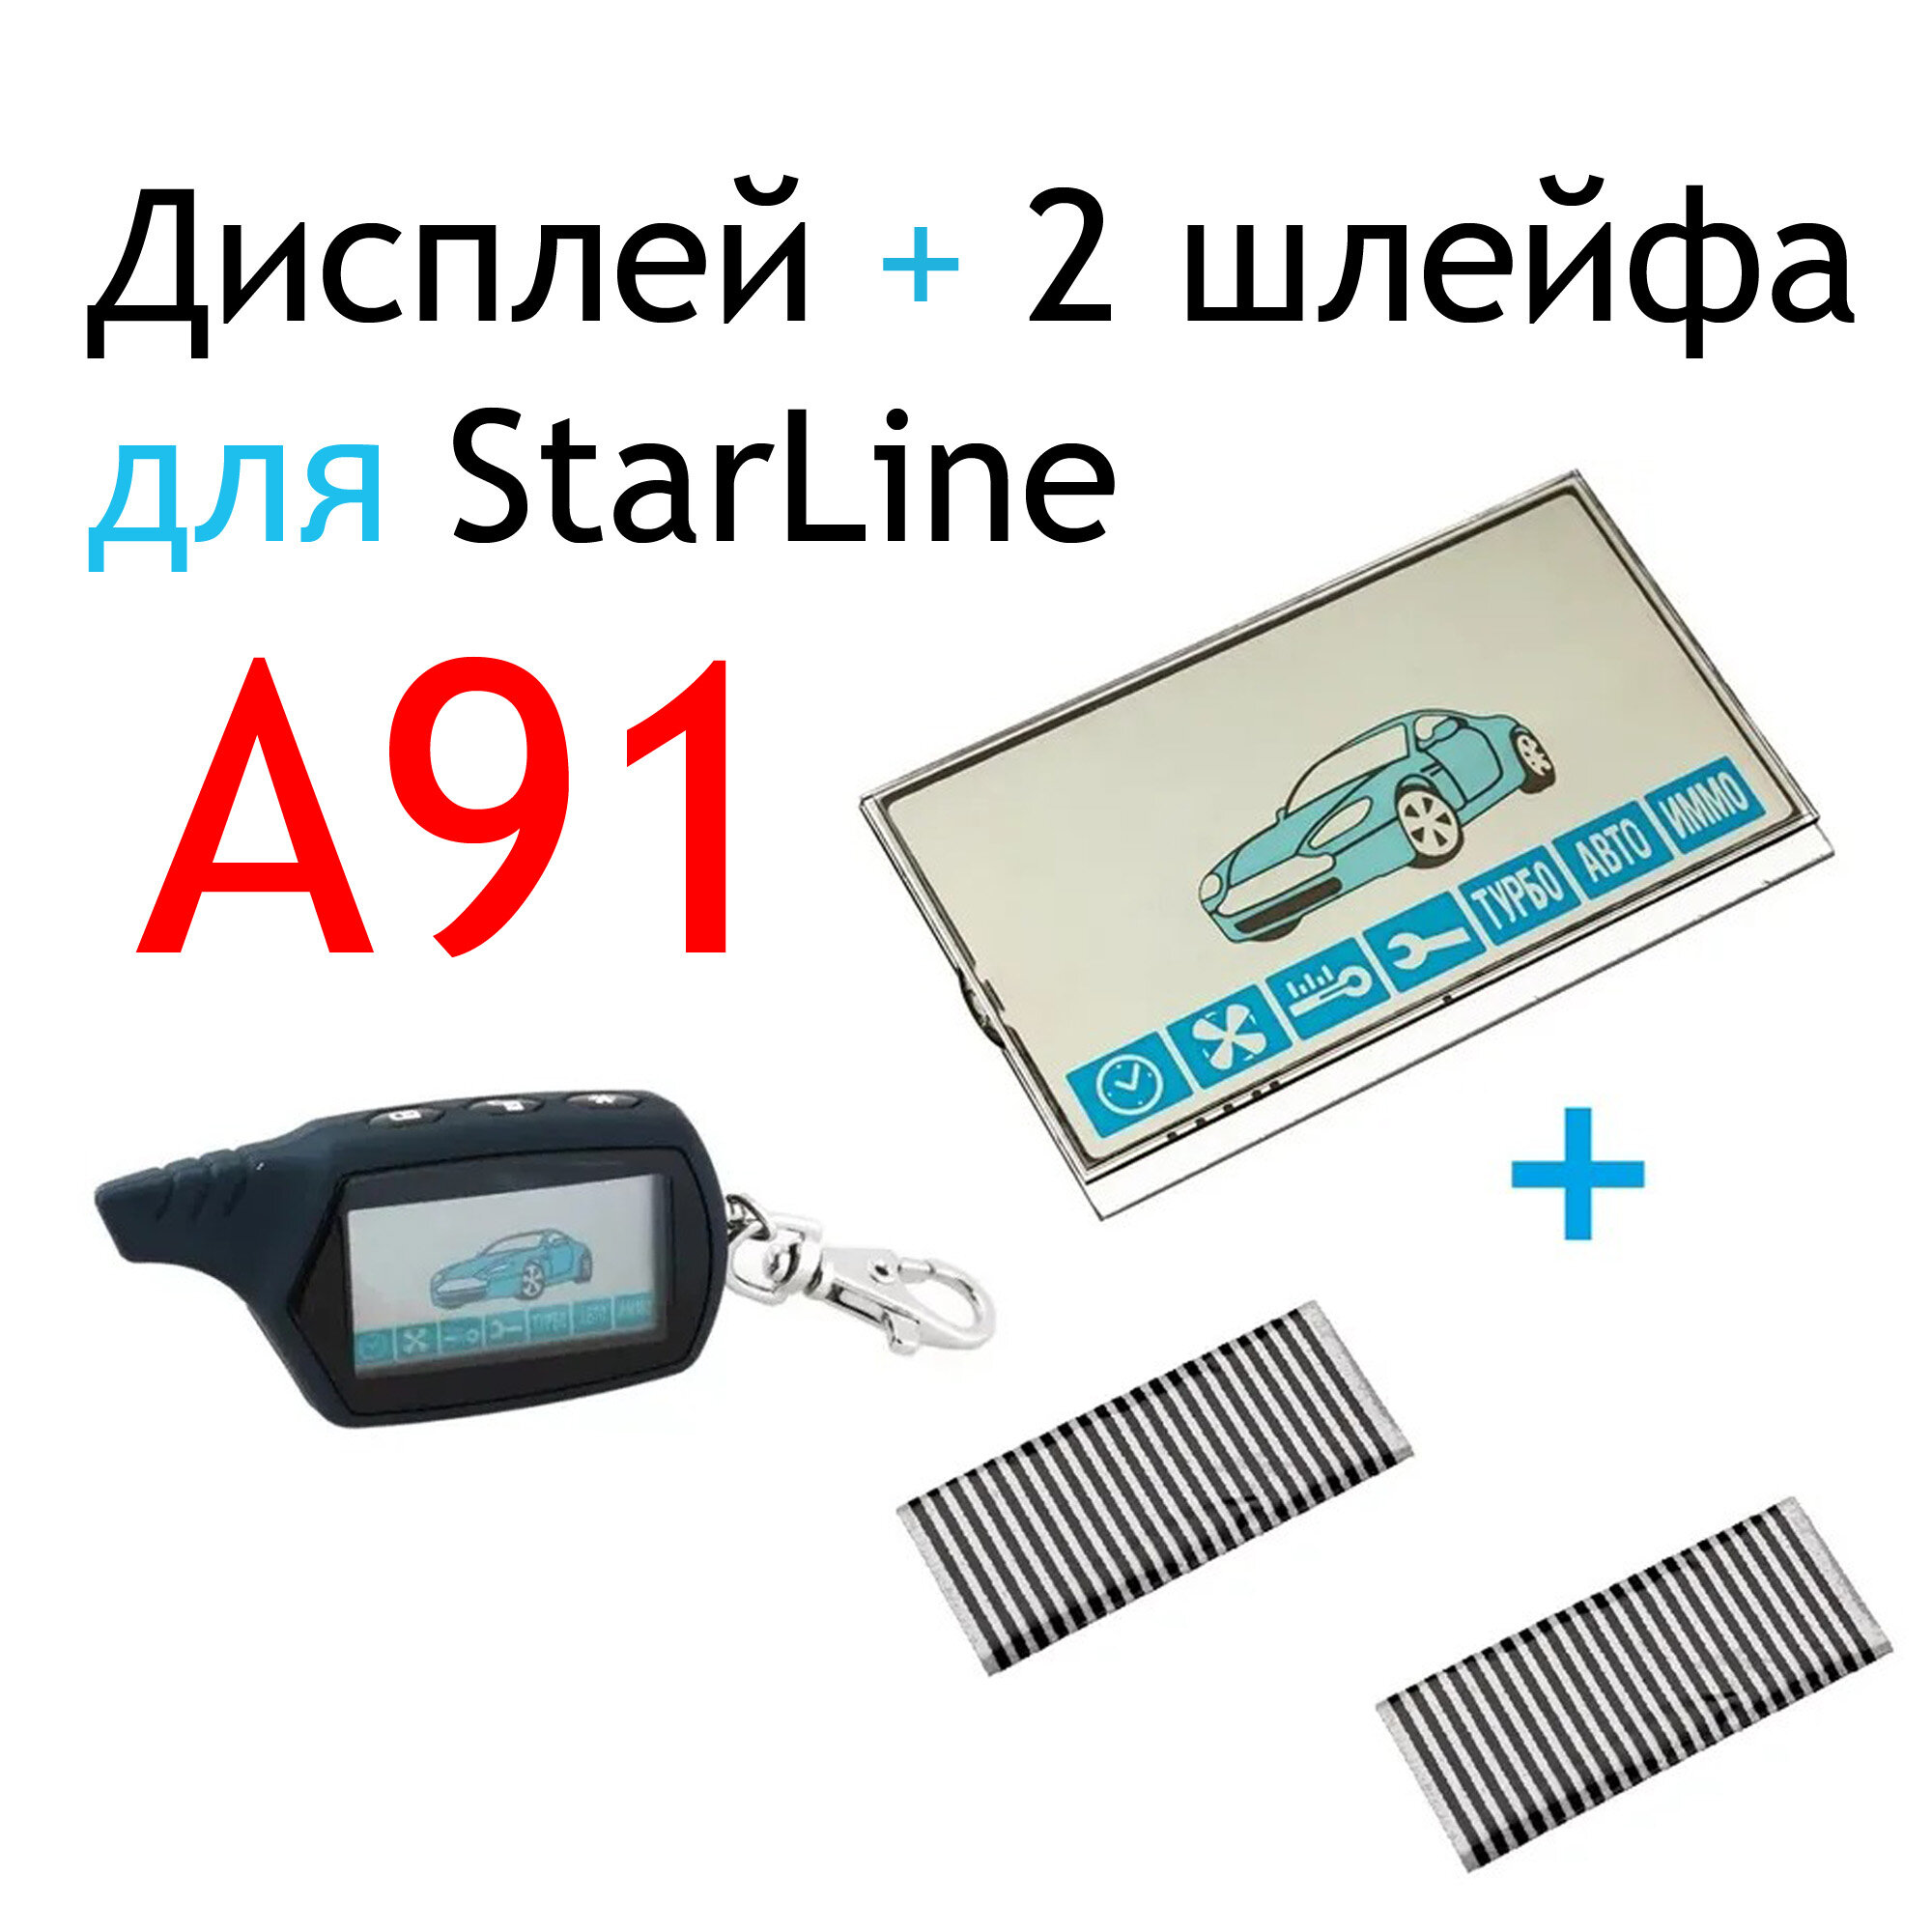 Дисплей для брелока автосигнализации Starline А91 + 2 шлейфа